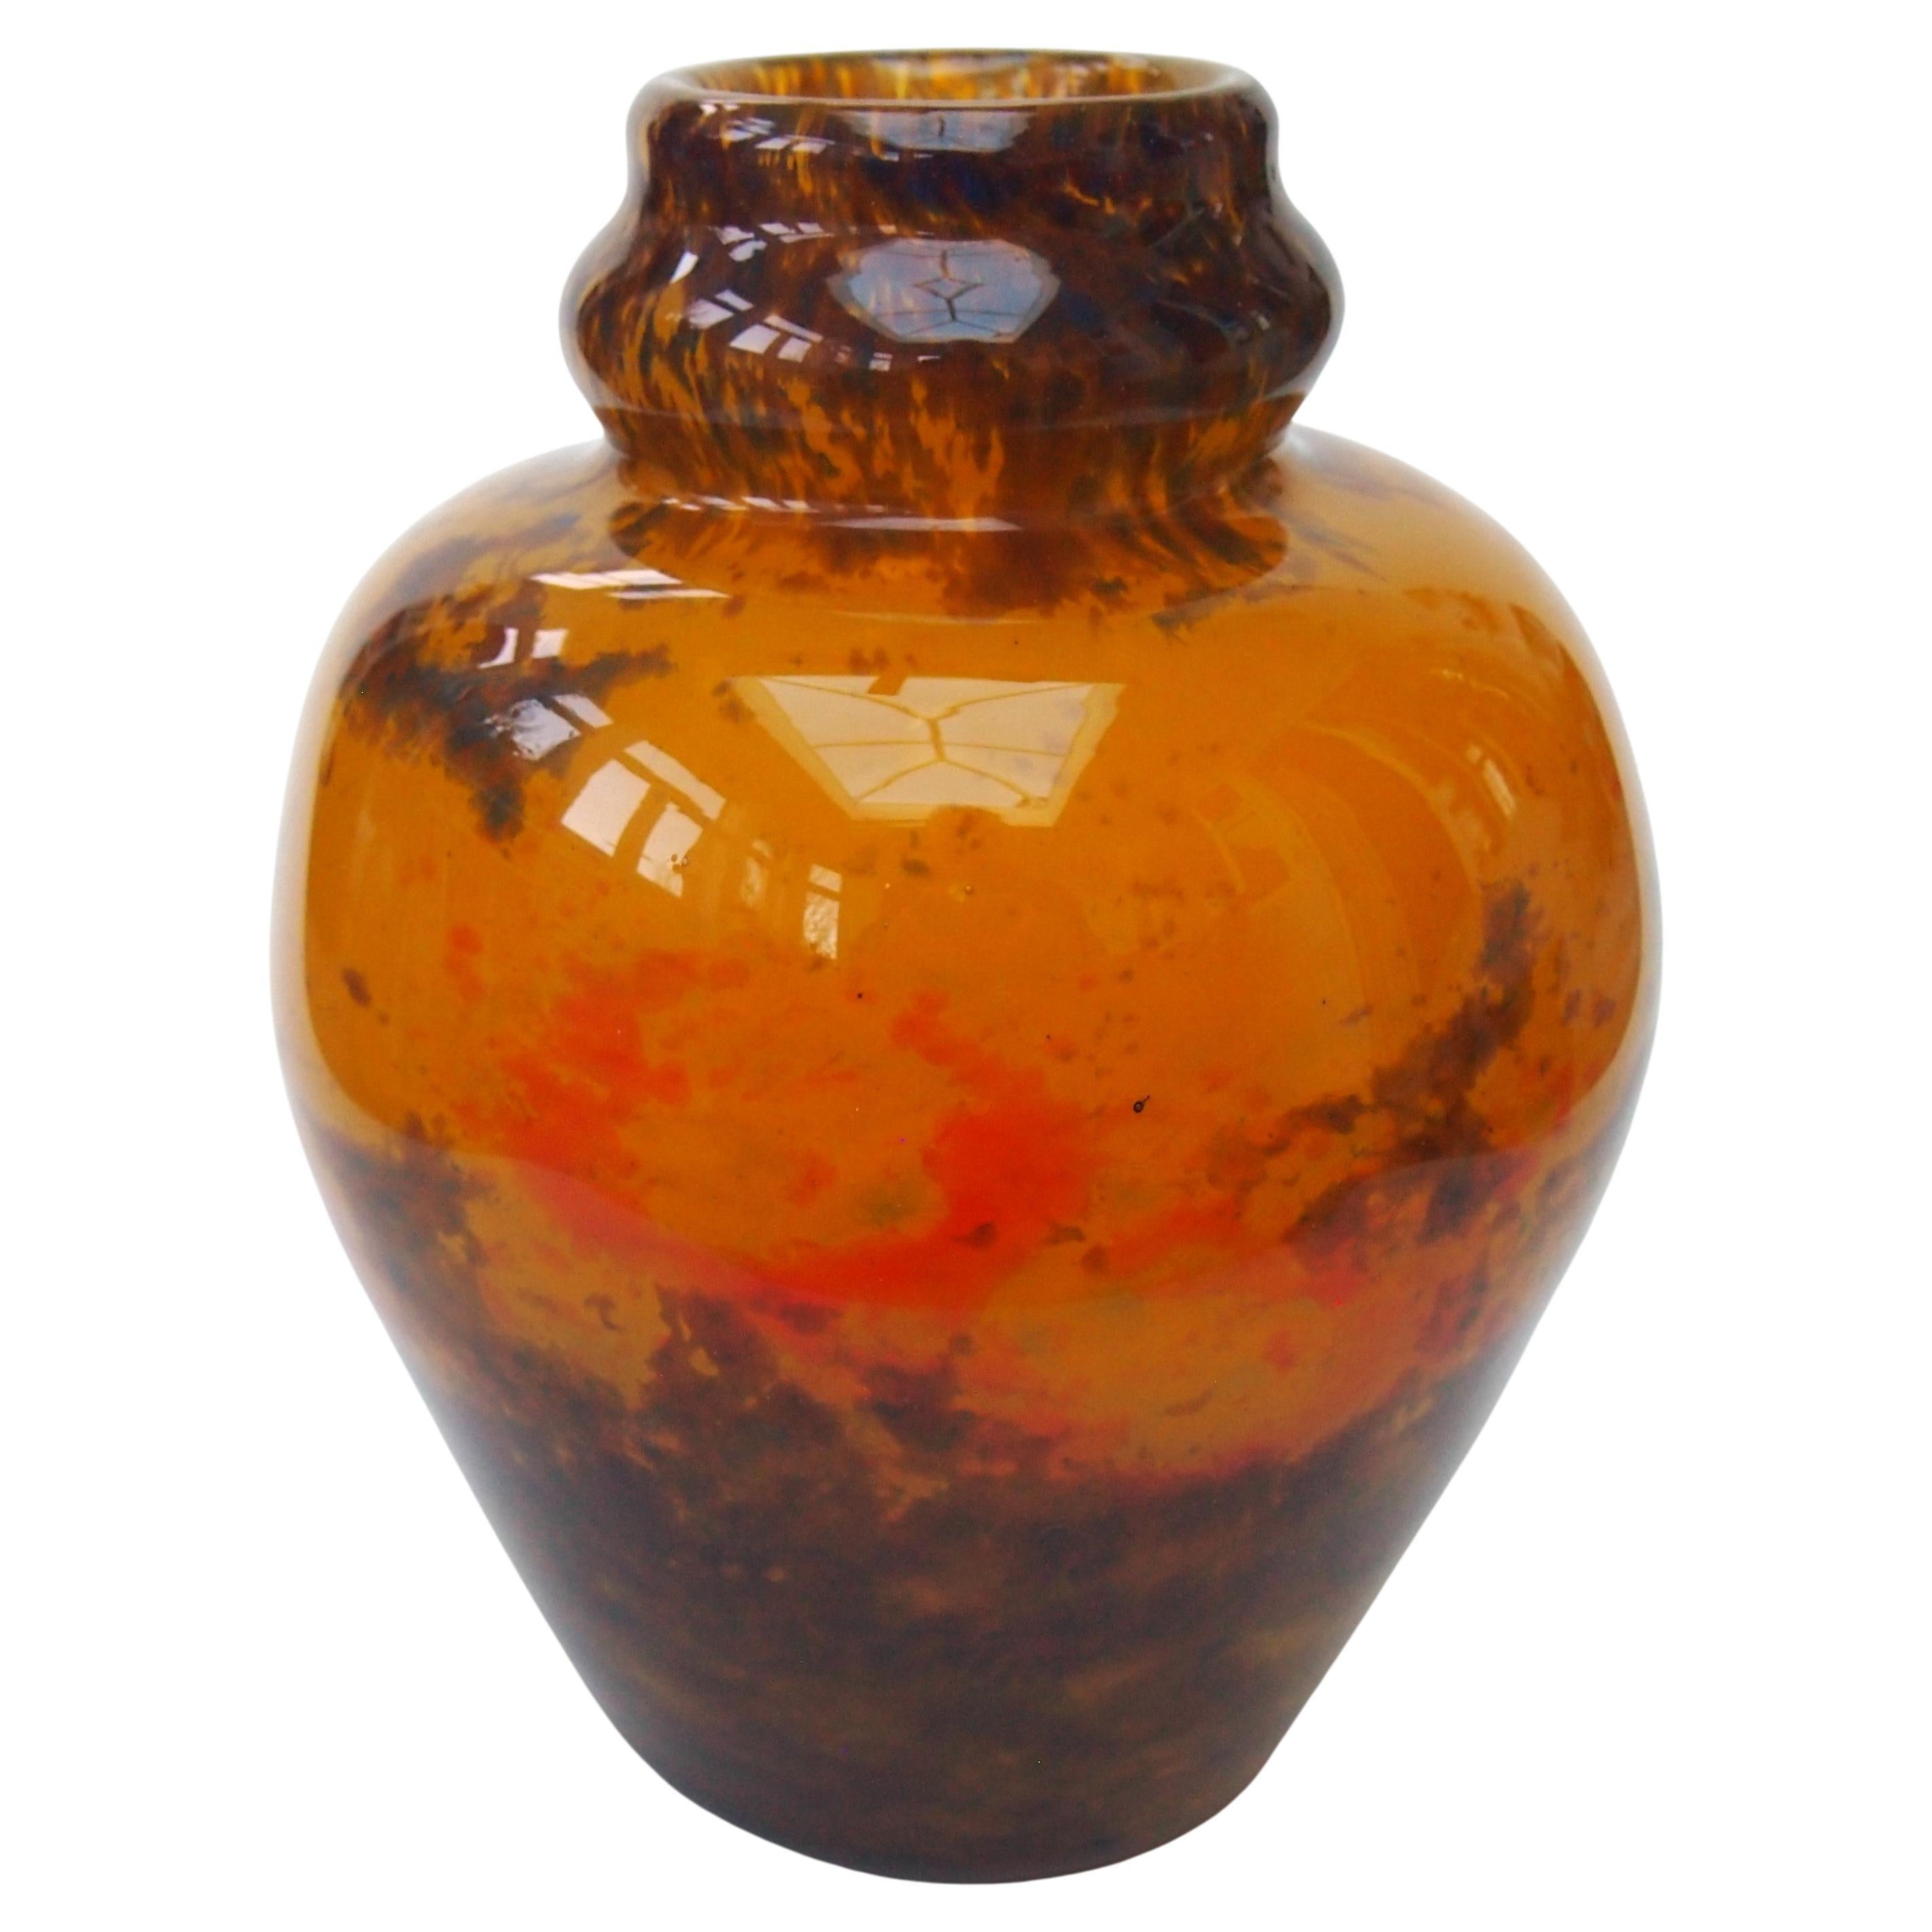 Striking Muller Freres Polychrome 'Jades' glass ball vase c 1920 -signed